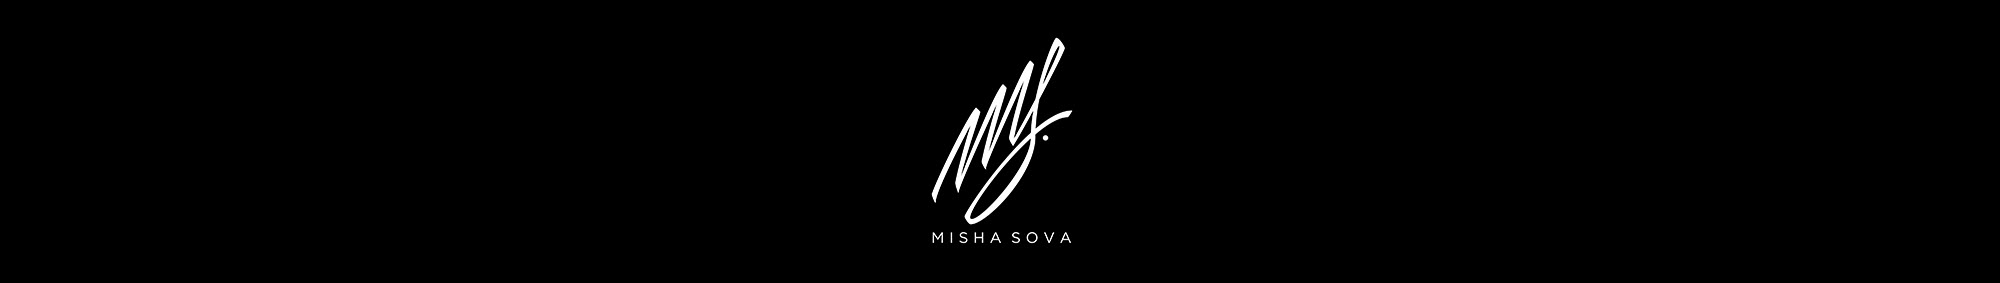 Misha Sova × Миша Сова's profile banner